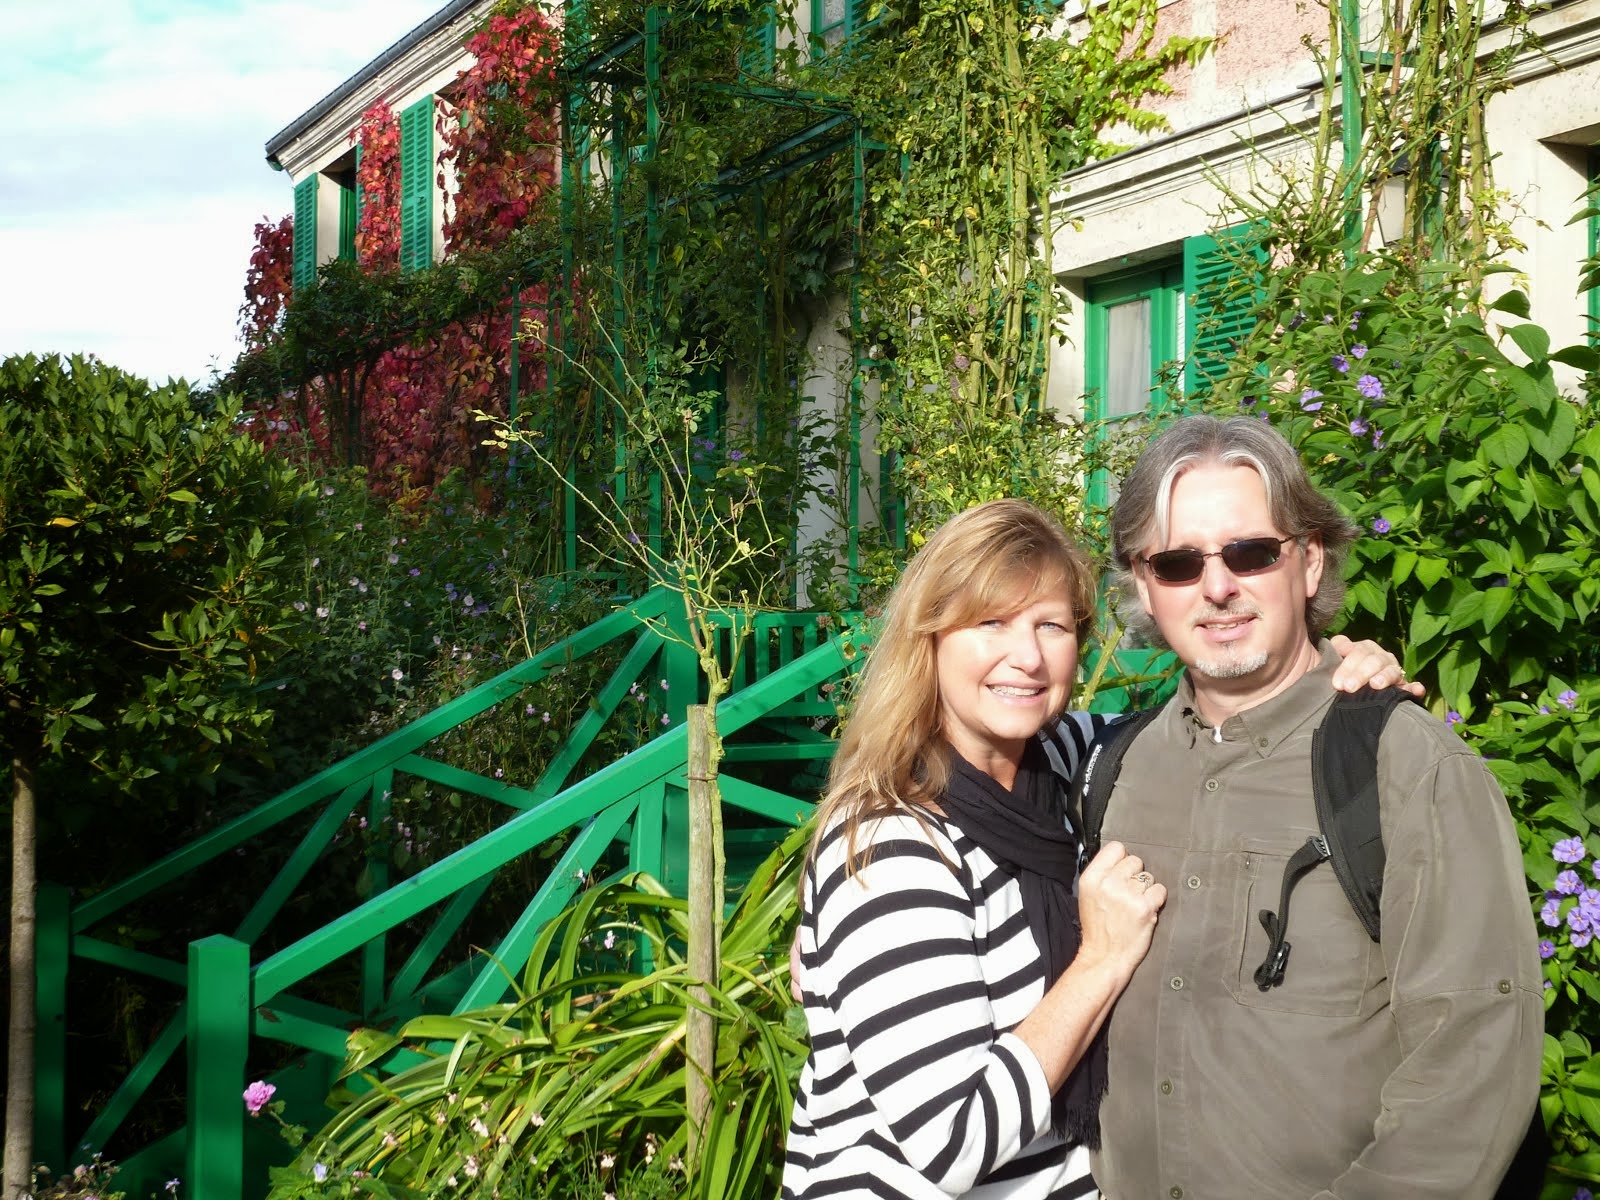 In front of Claude Monet's home